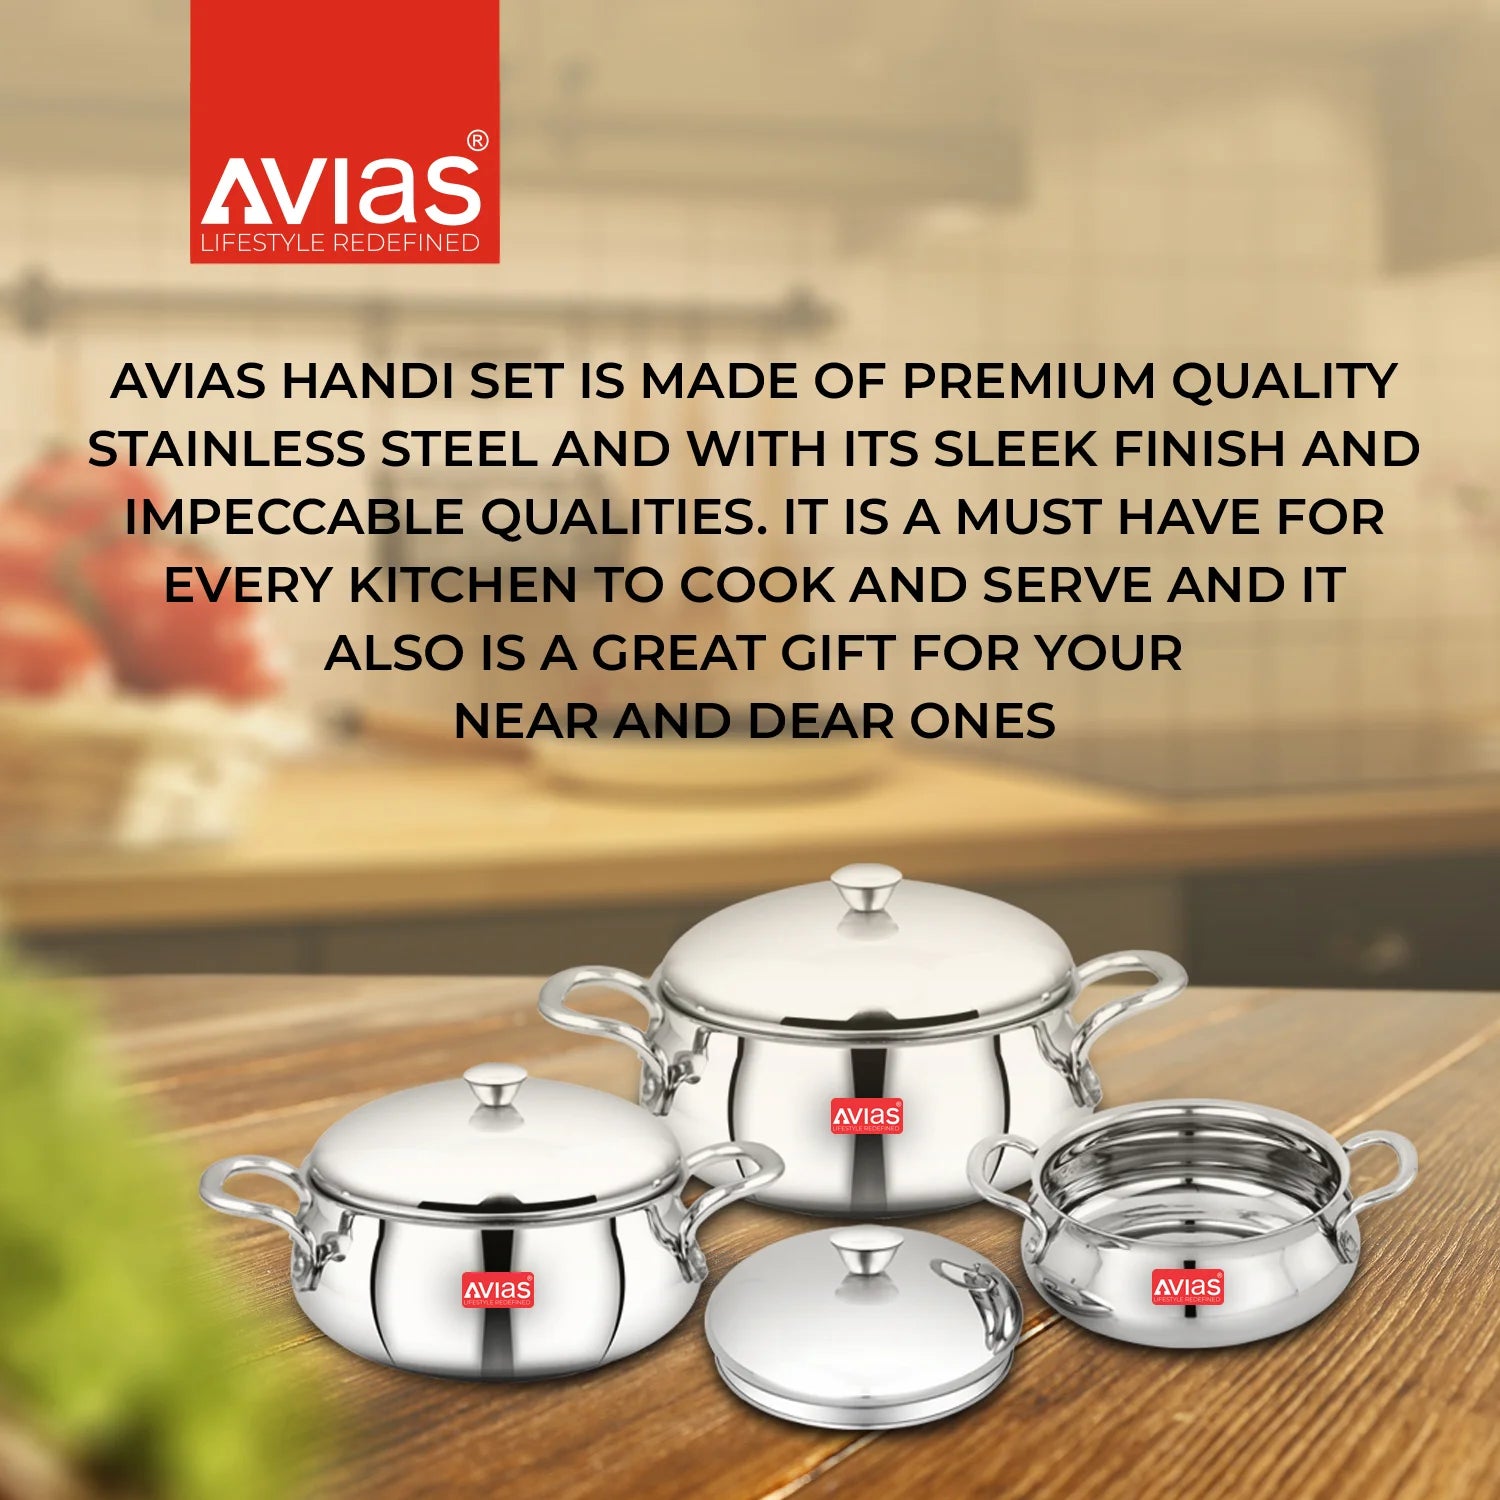 AVIAS Aroma High-quality stainless steel Handi Set for multi-purpose